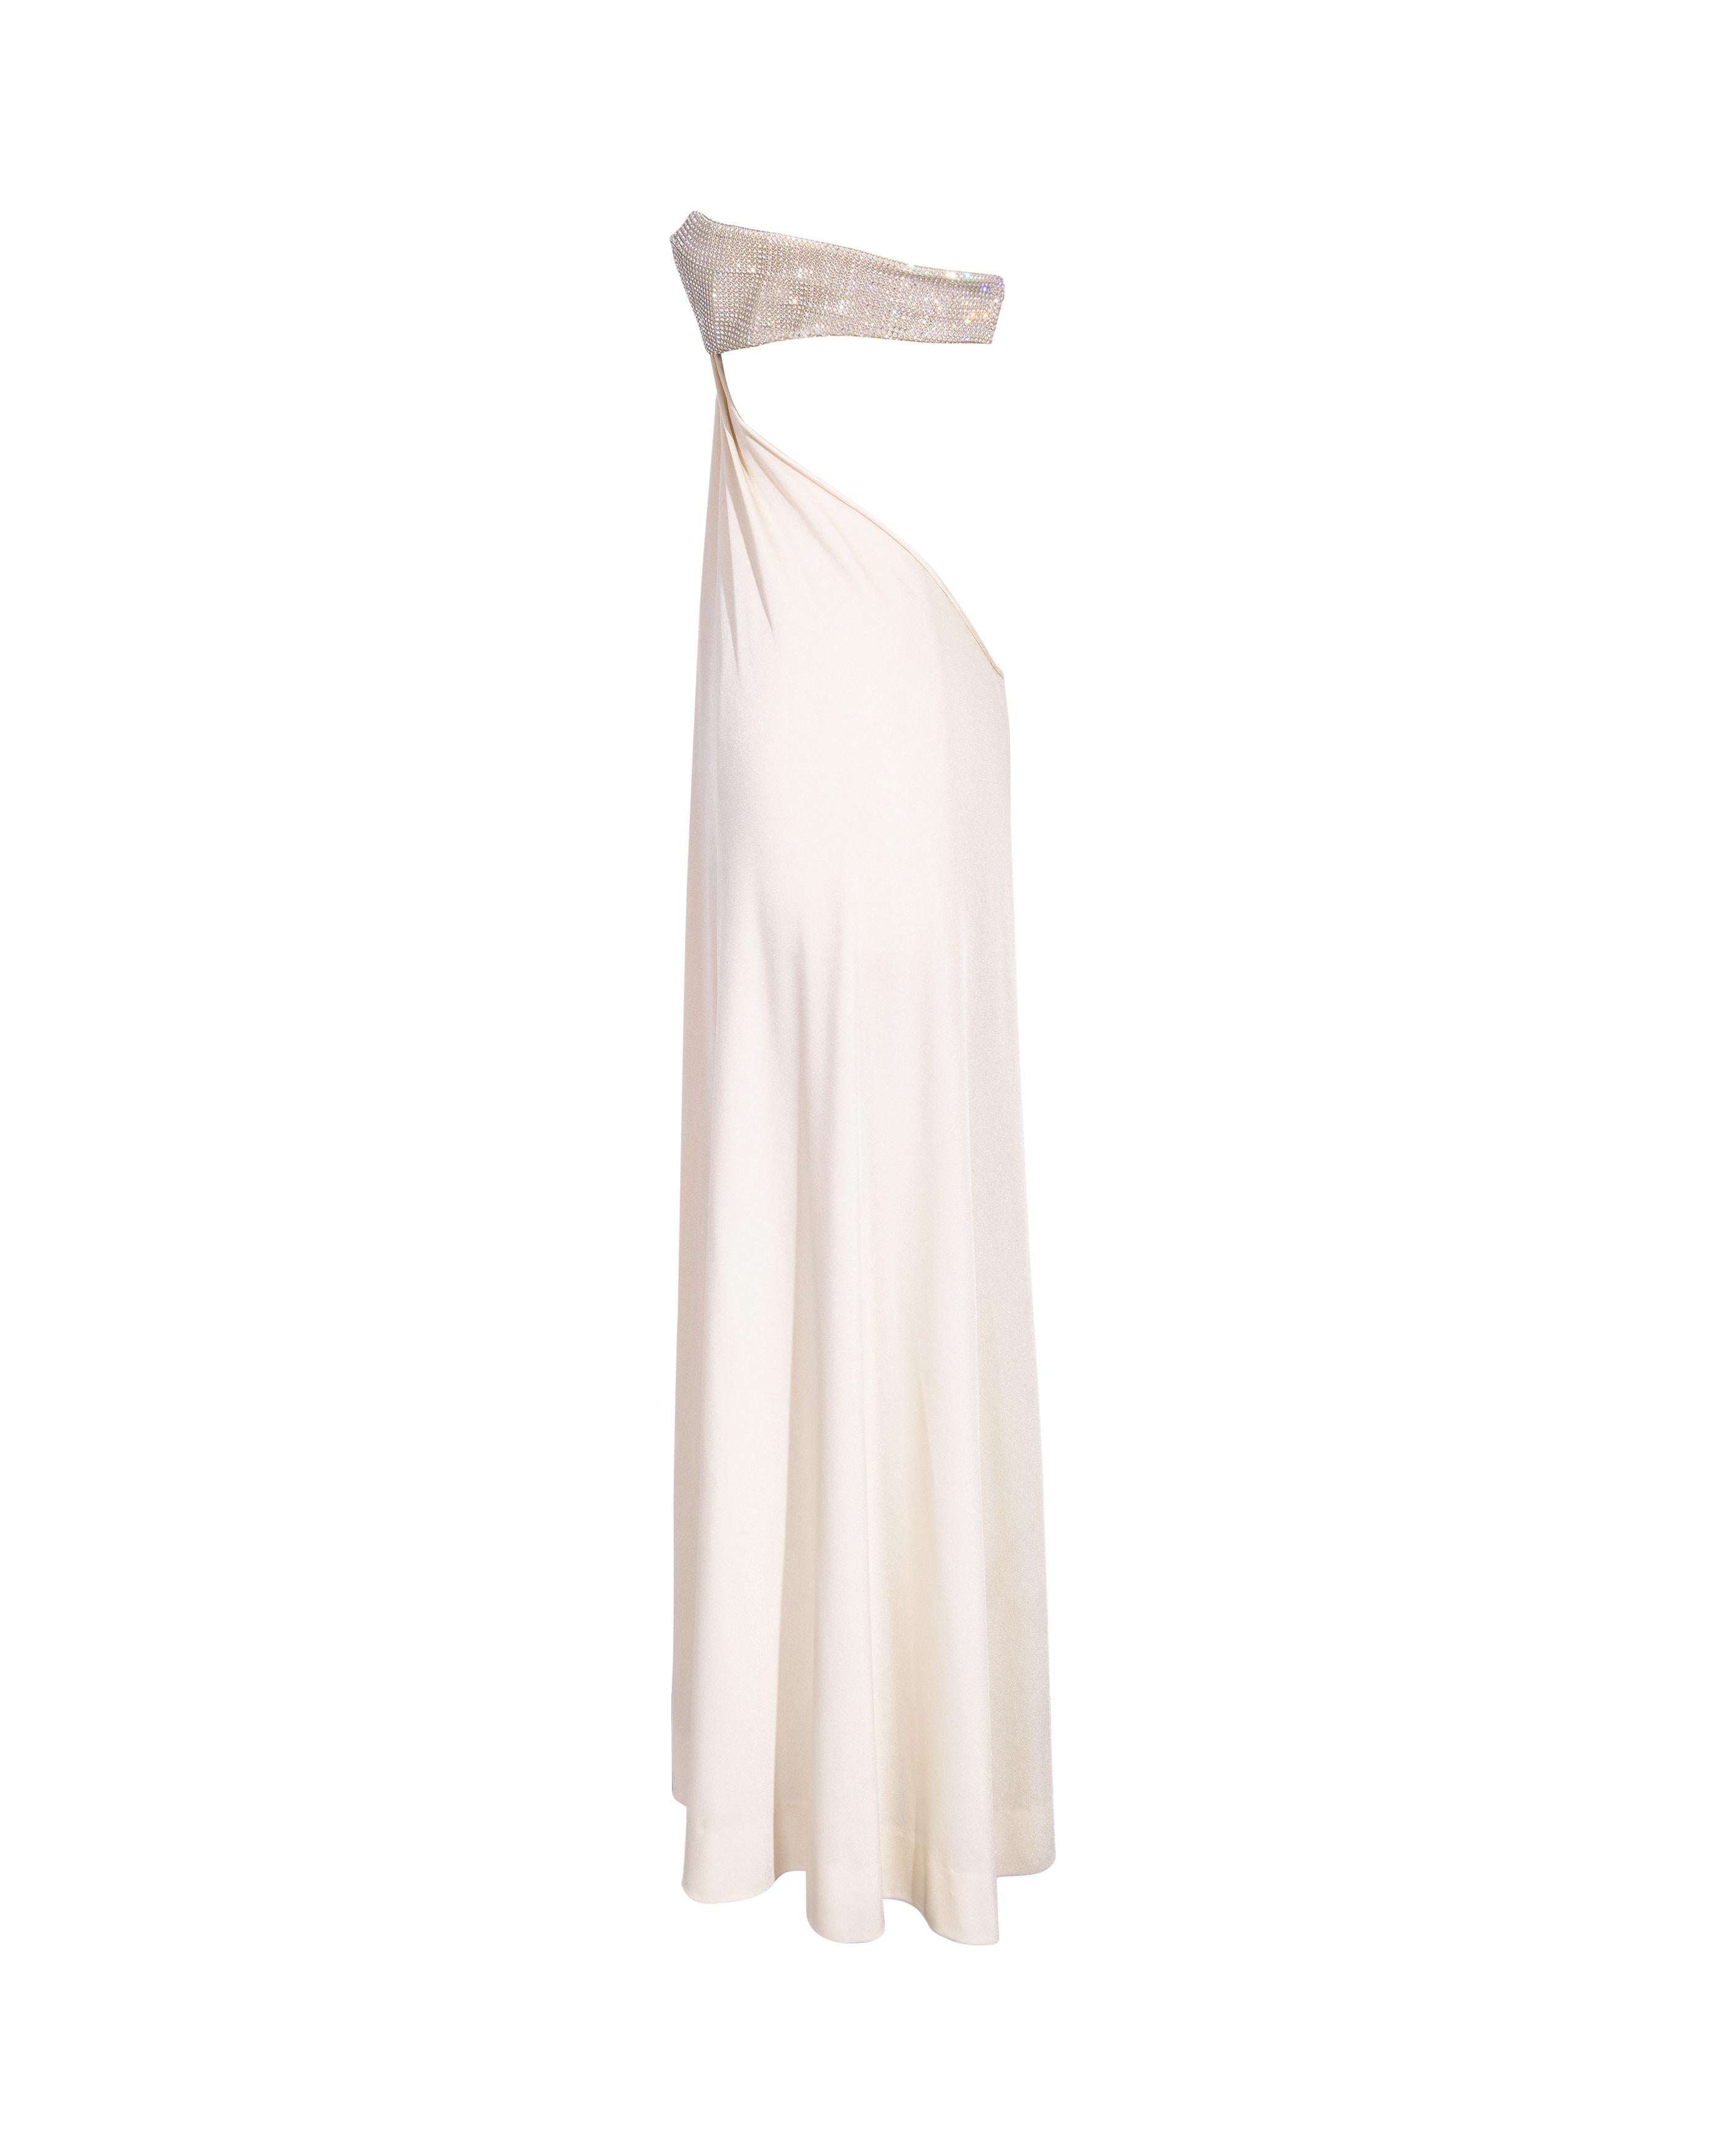 Women's 1978 Loris Azzaro White Gown with Crystal Cutout Bodice